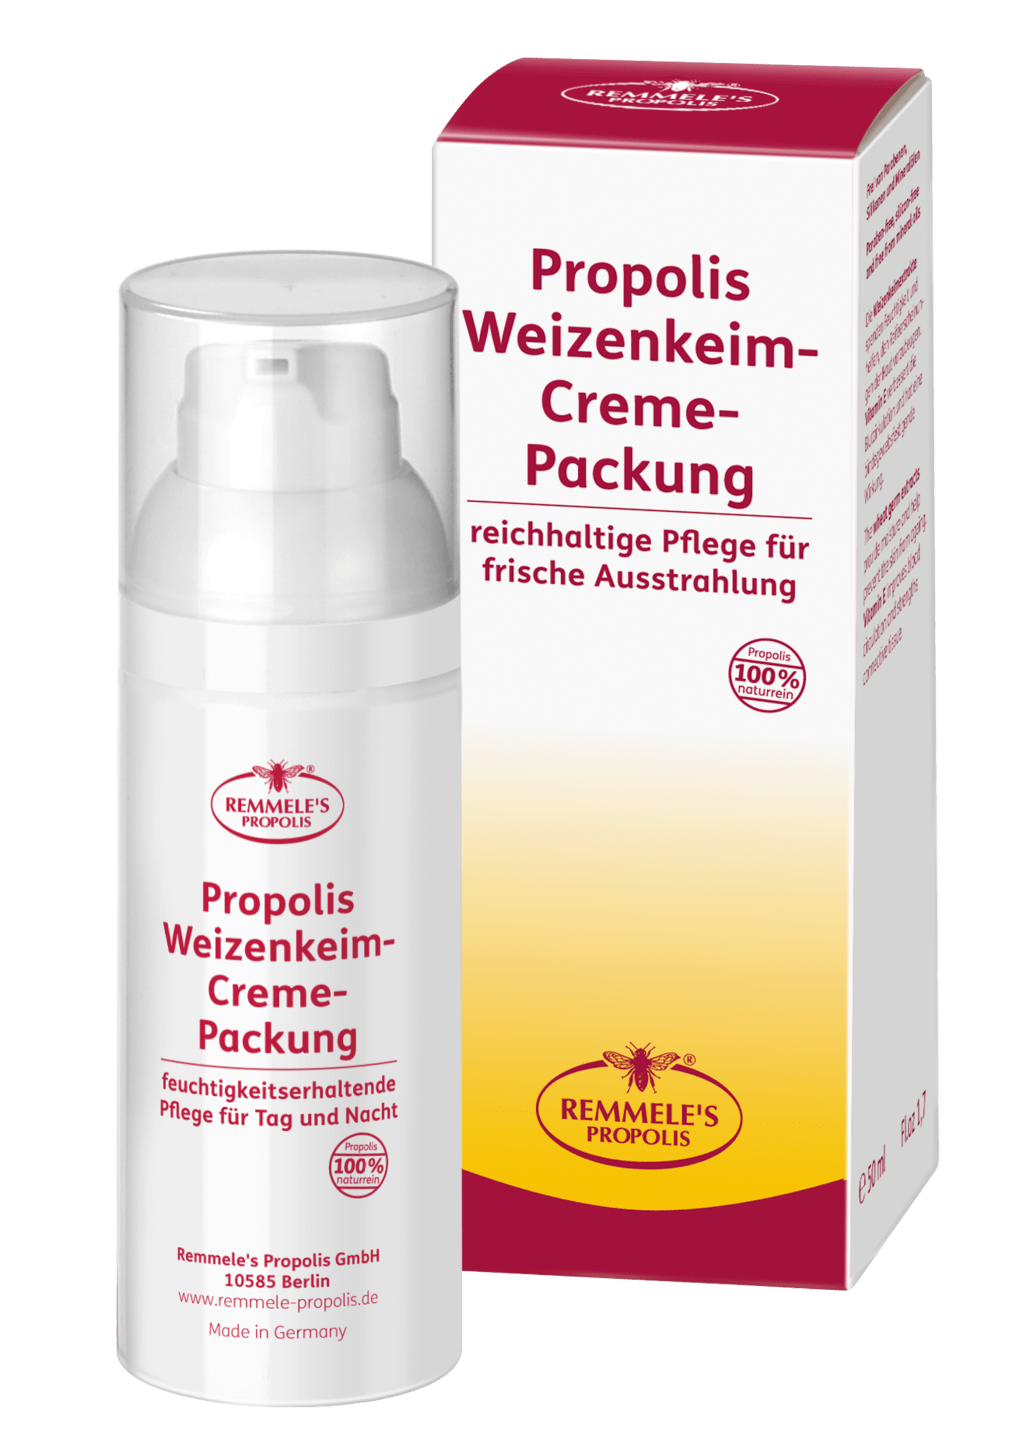 Remmele's Propolis - Propolis Weizenkeim-Creme-Packung, 50 ml